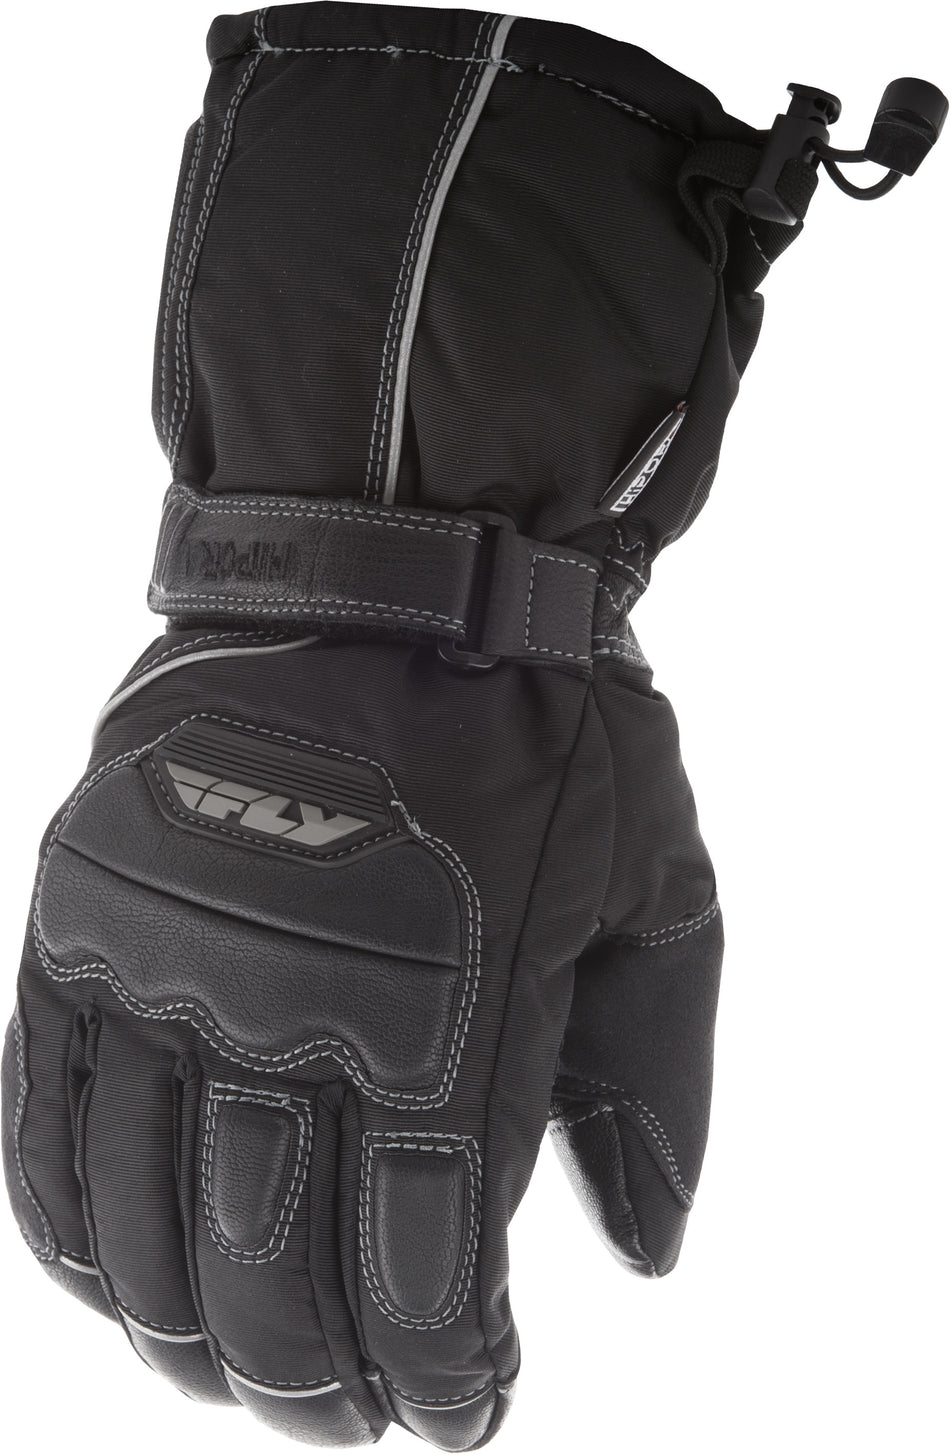 FLY RACING Aurora Gloves Black Md 363-3891M